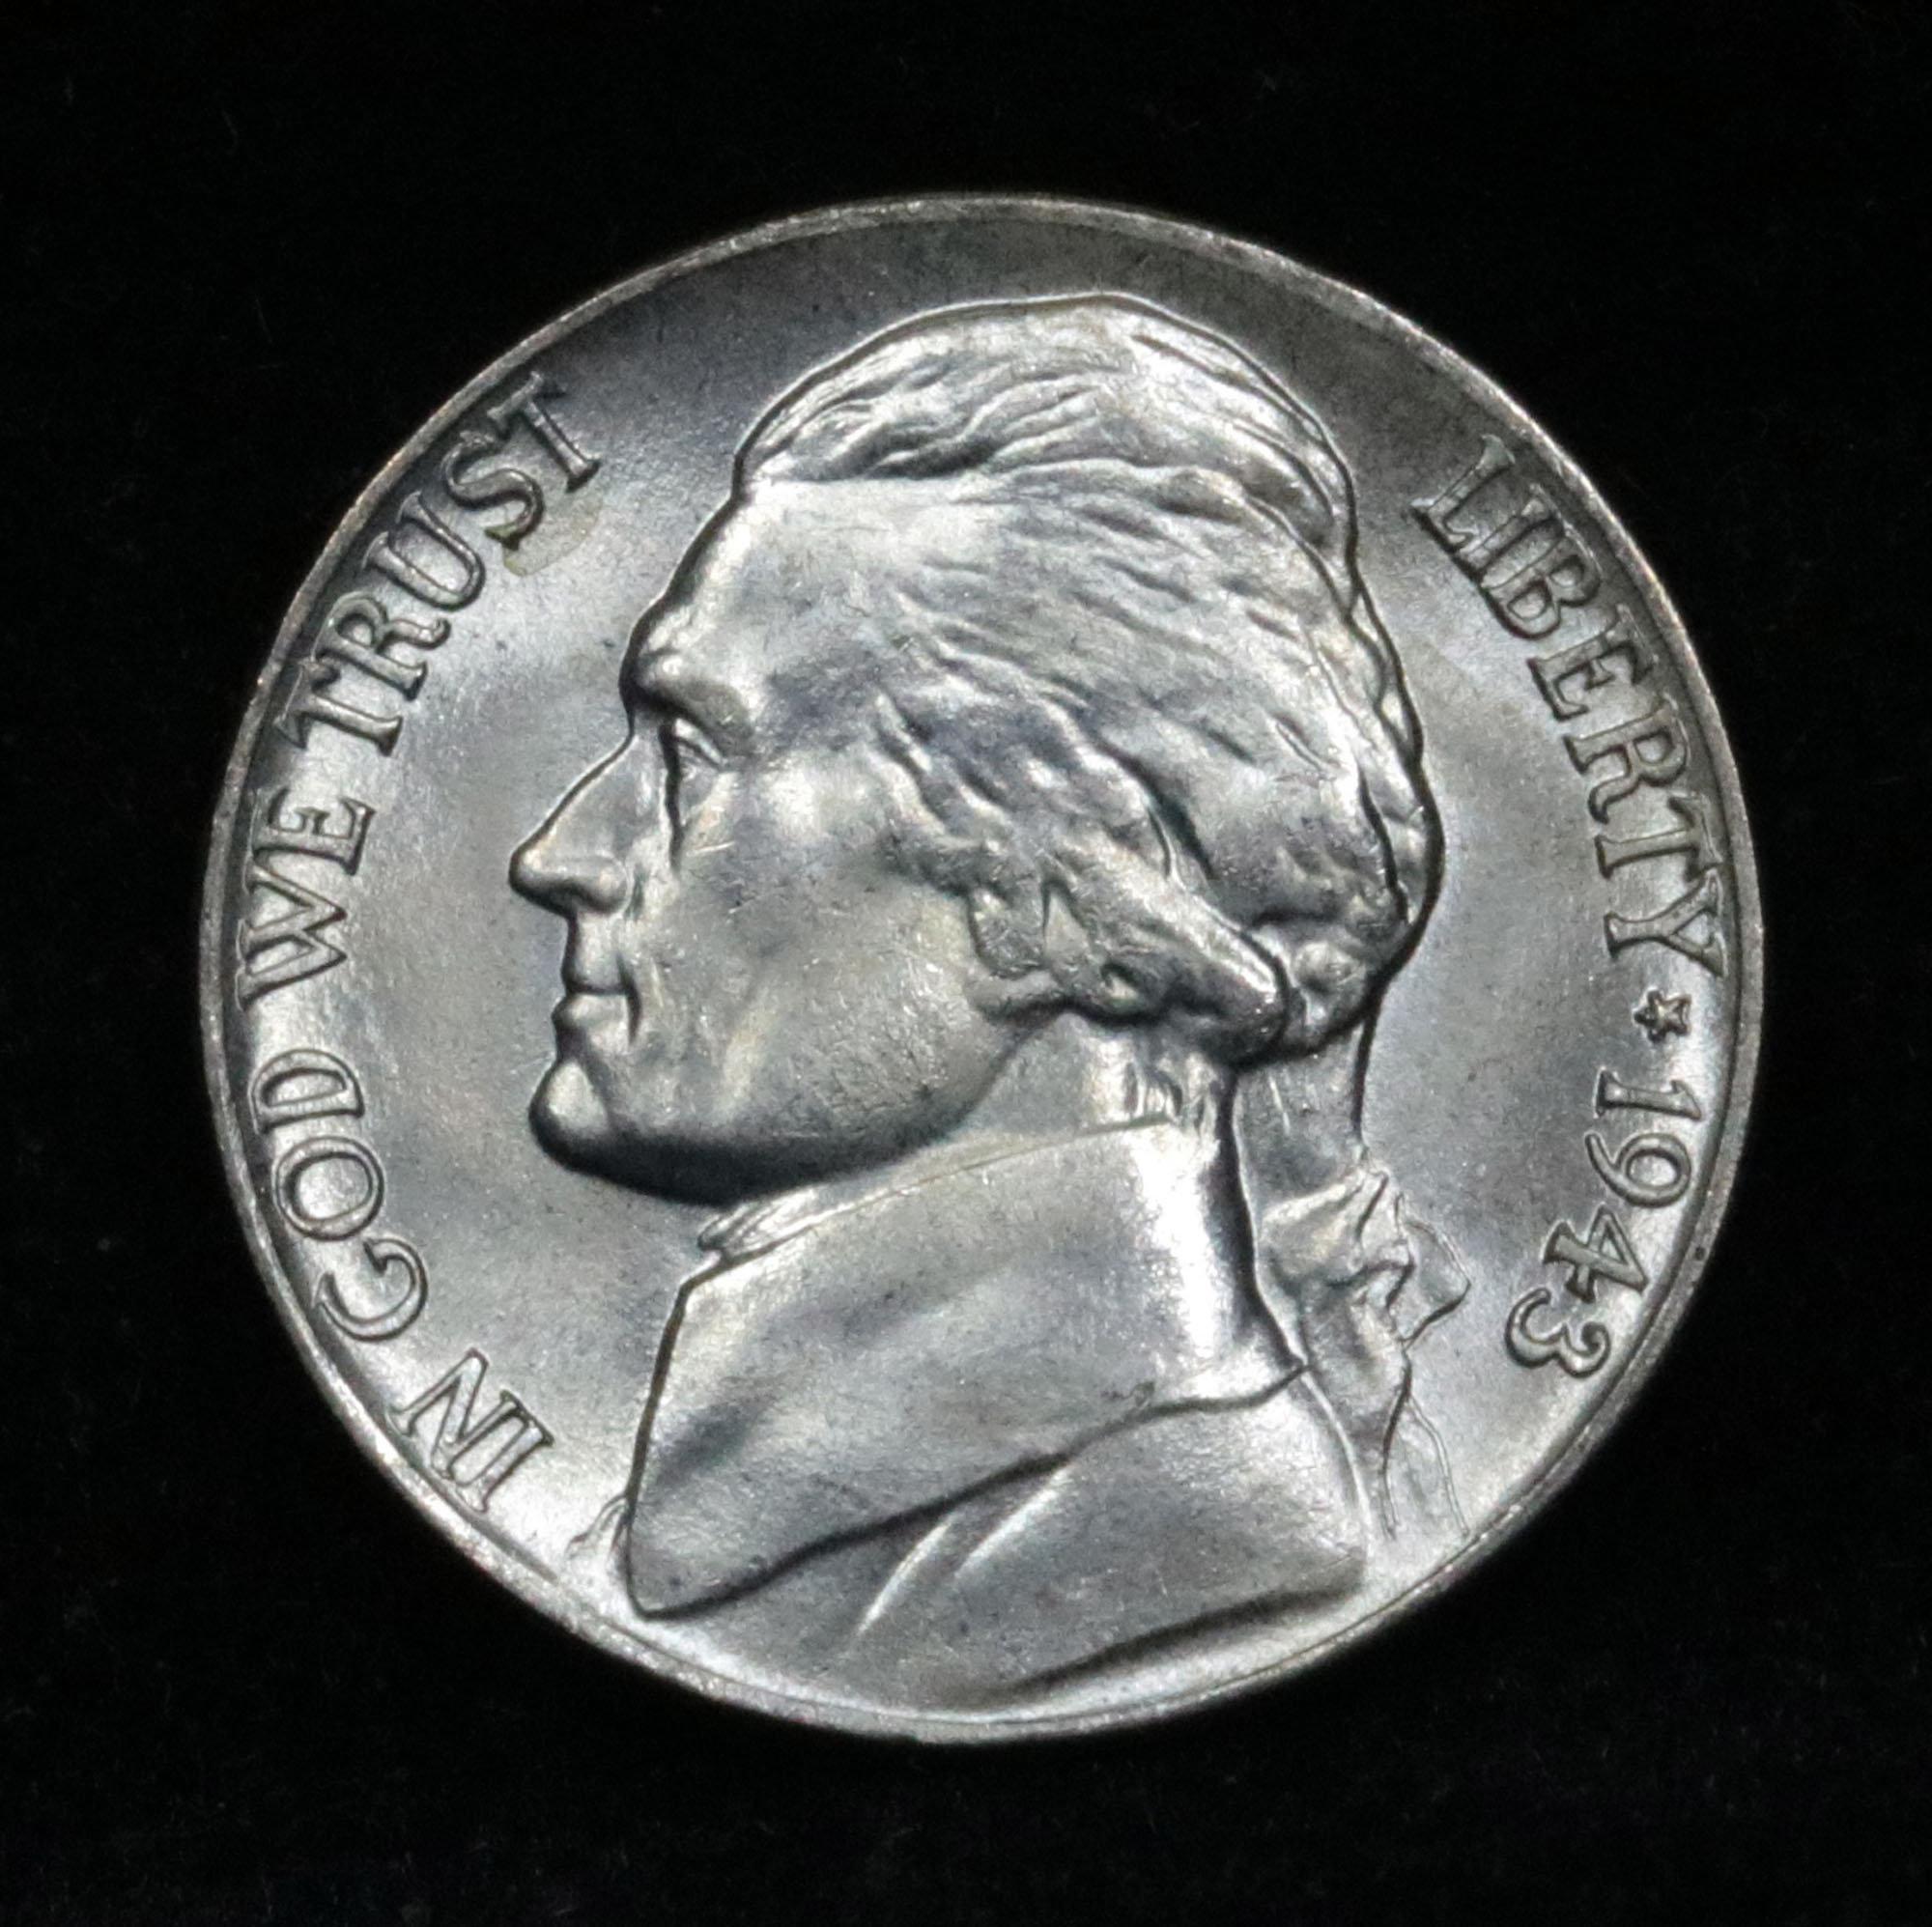 1943-p Jefferson Nickel 5c Grades Choice+ Unc